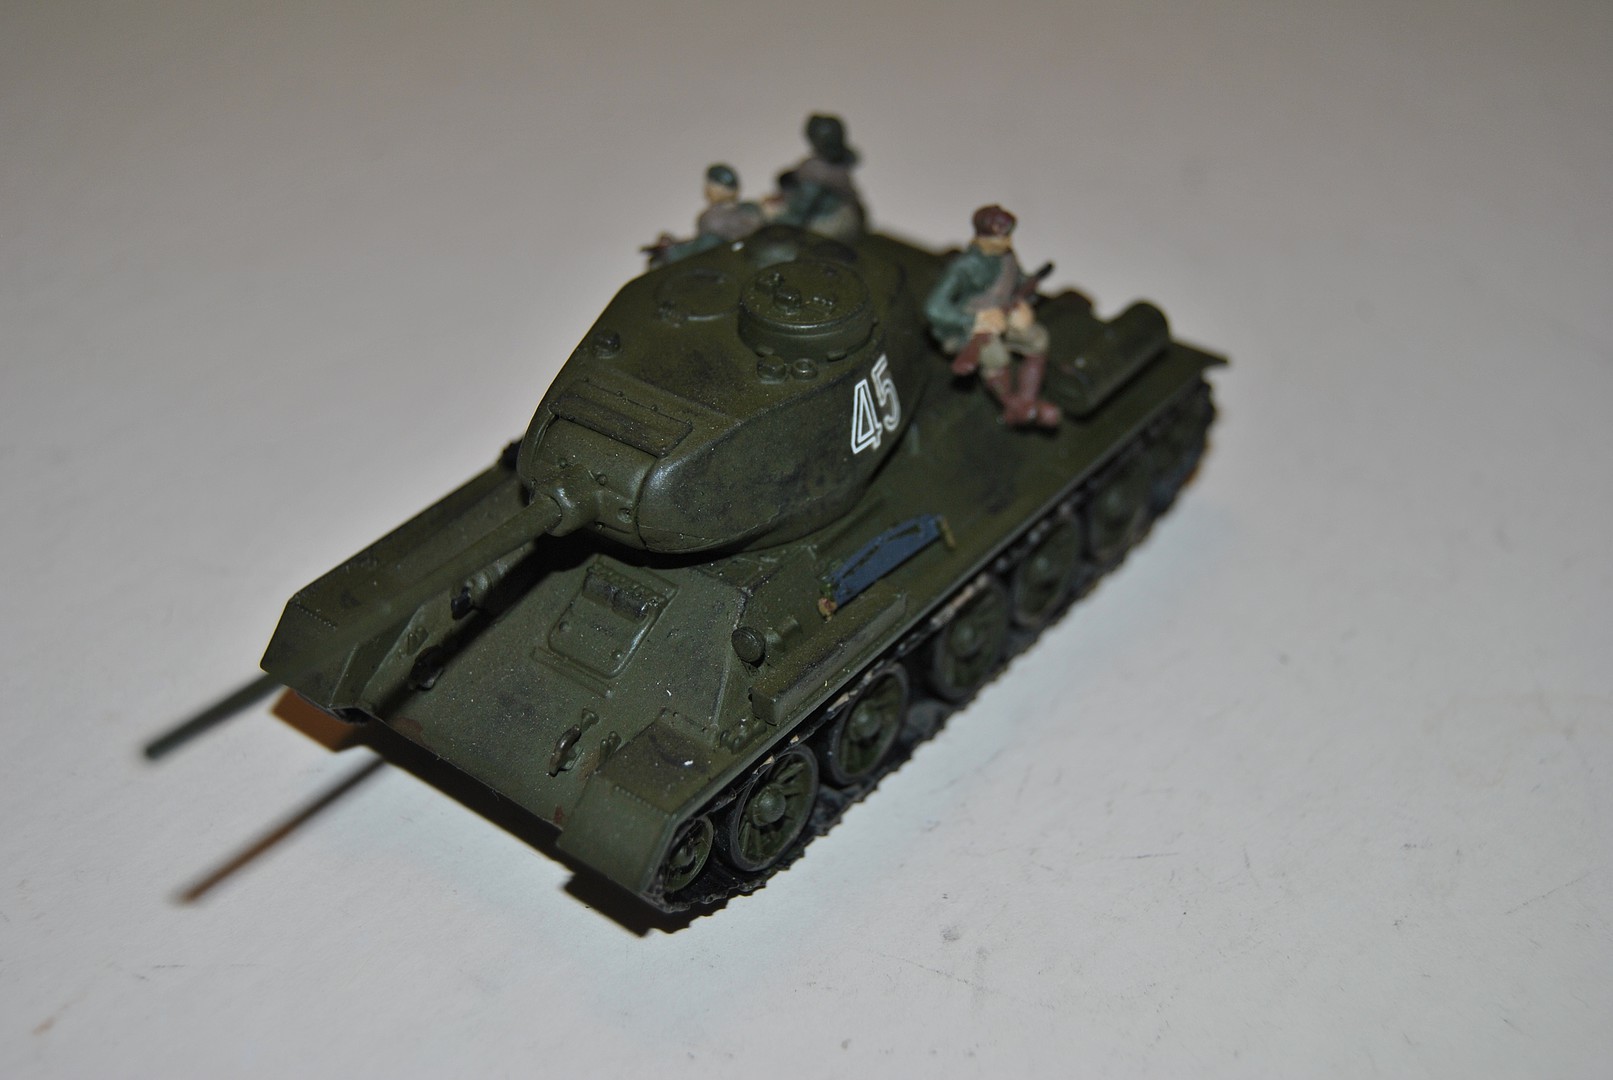 1/72 Scale Pegasus Hobbies Soviet T-34/85 Medium Tank 2 Model KIT #7662 